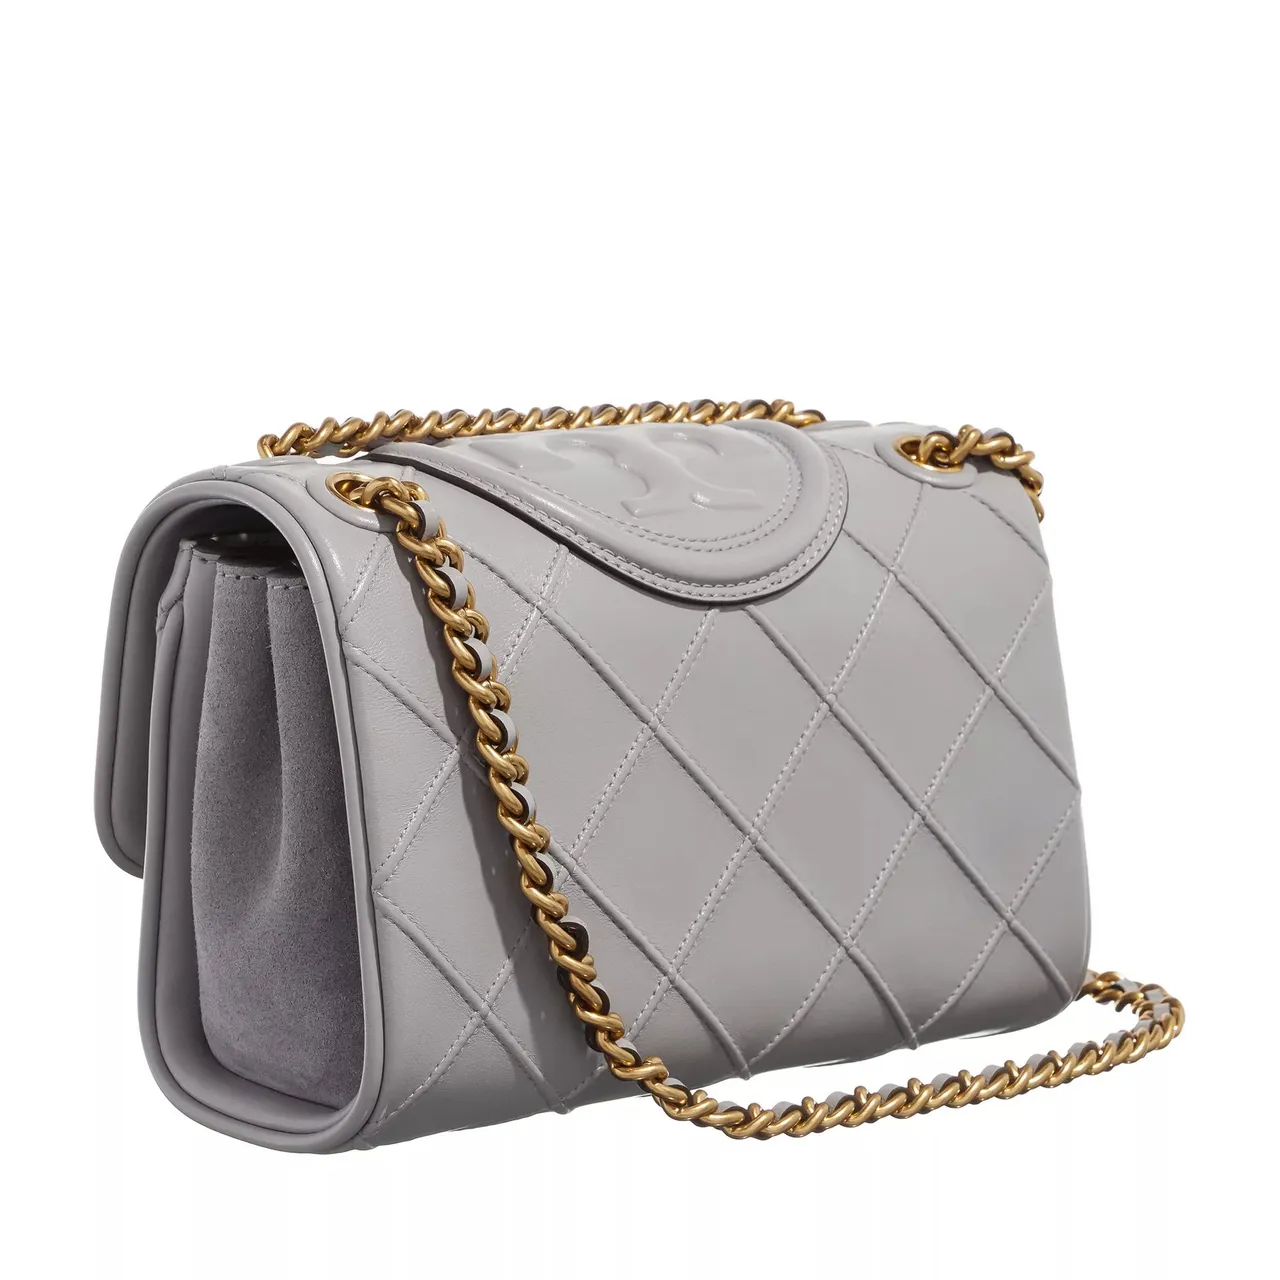 Tory Burch Crossbody Bags - Fleming Soft Small Convertible Shoulder Bag - grey - Crossbody Bags for ladies